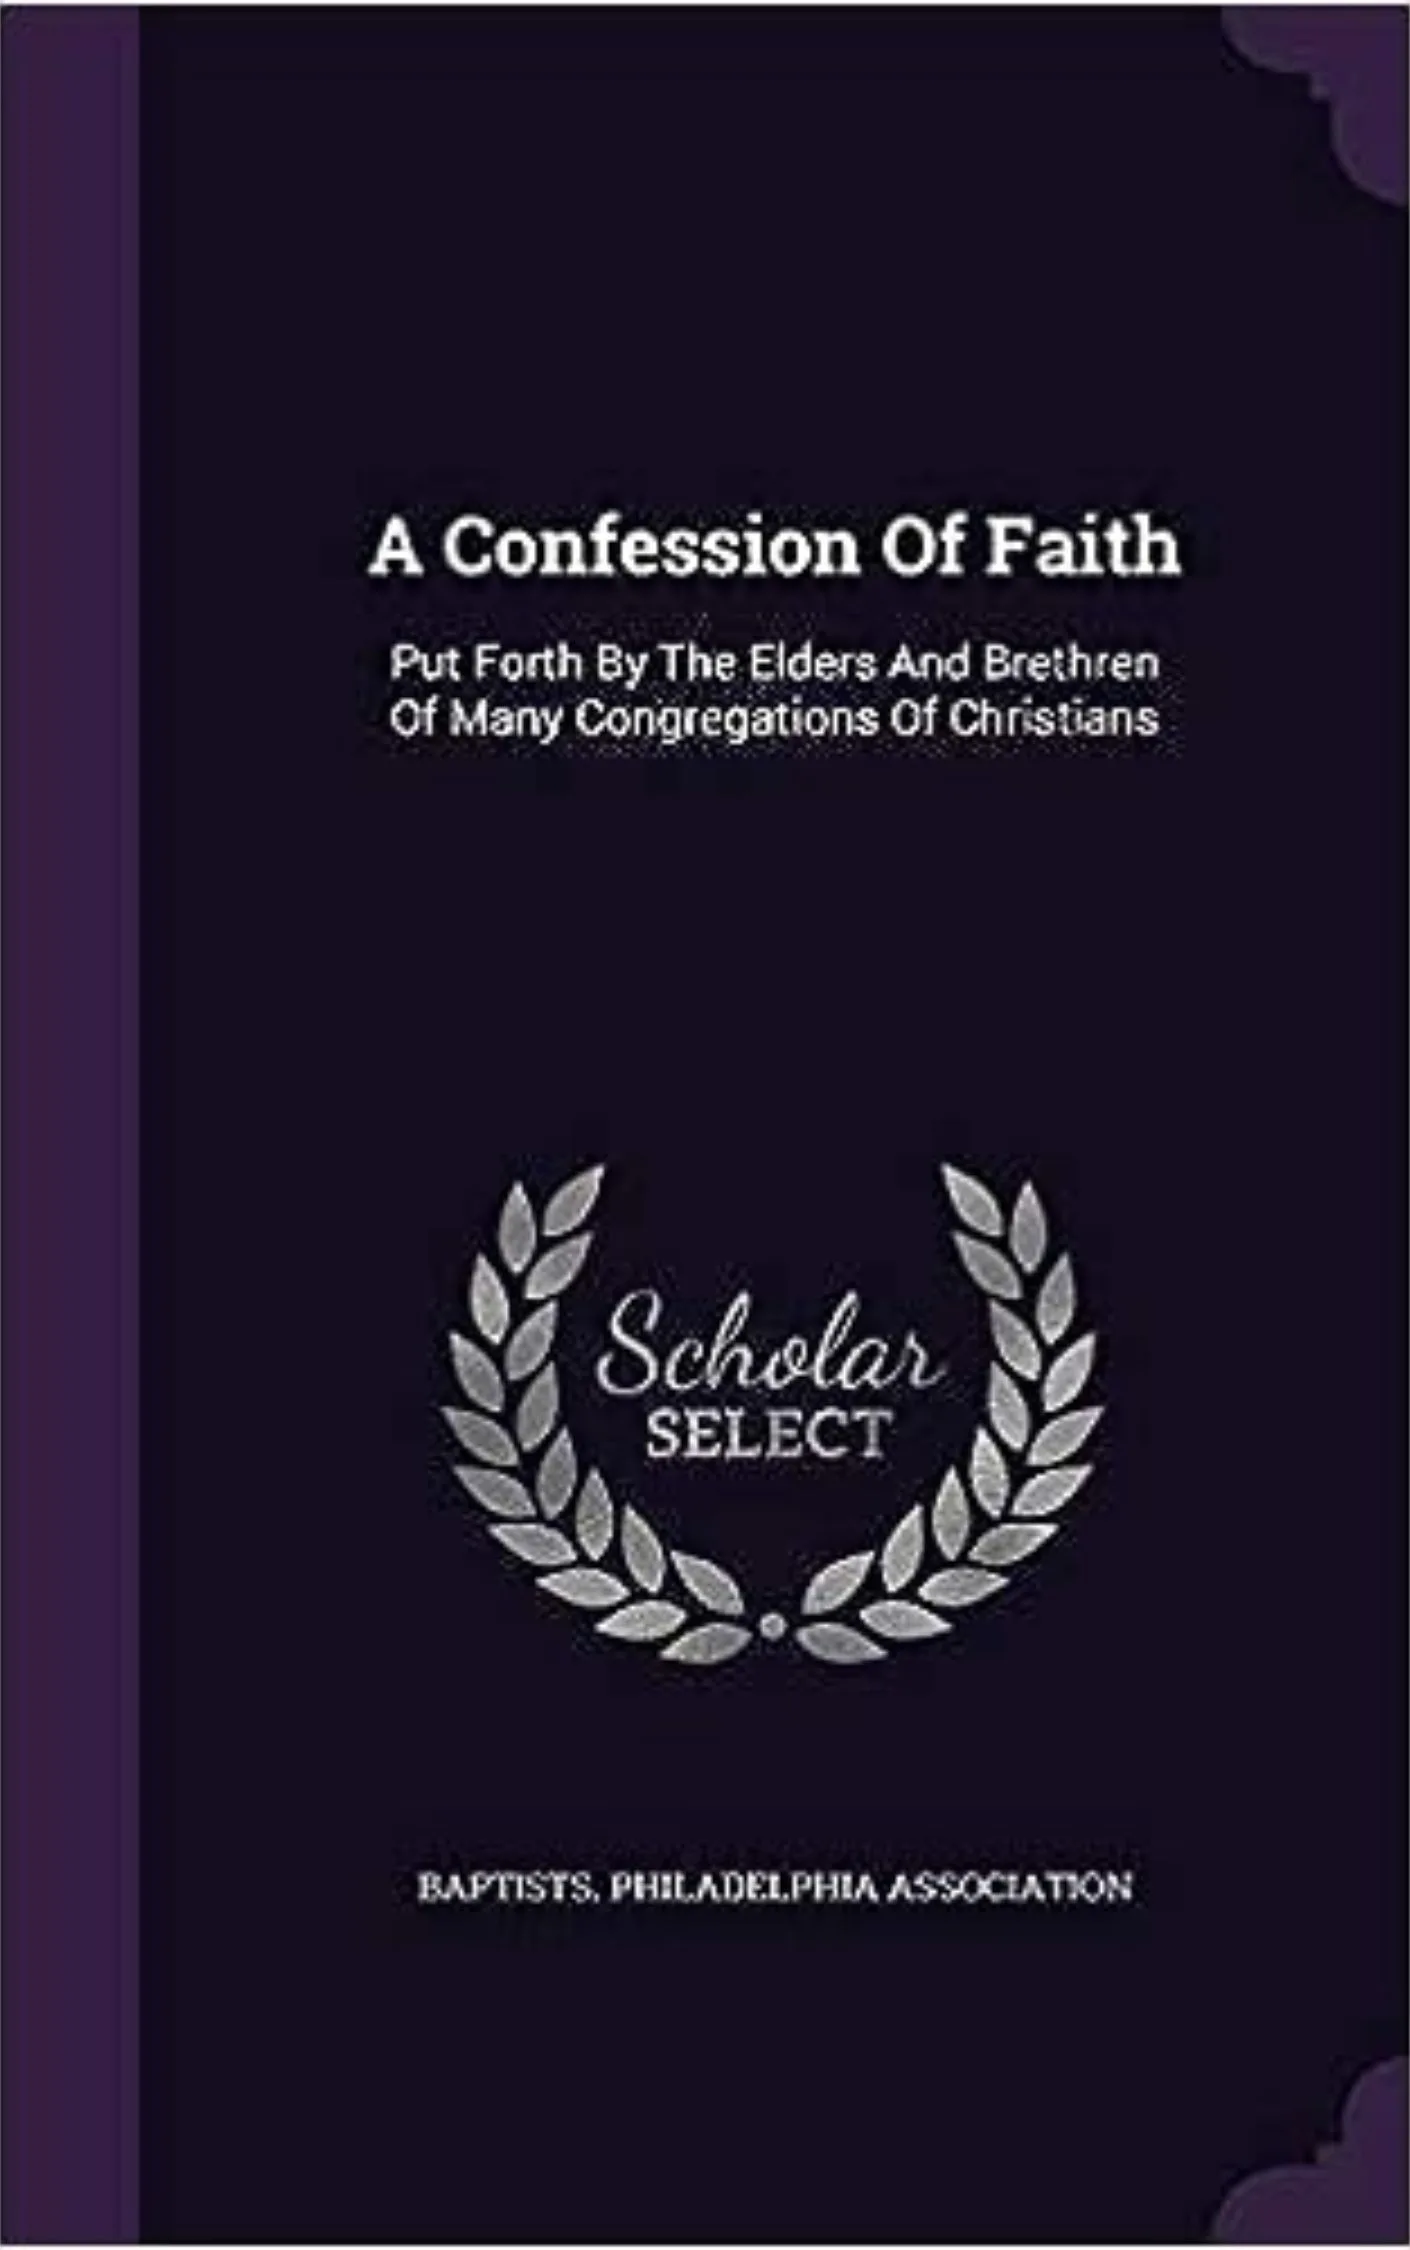 Philadelphia Confession of Faith - Philadelphia Baptist Association